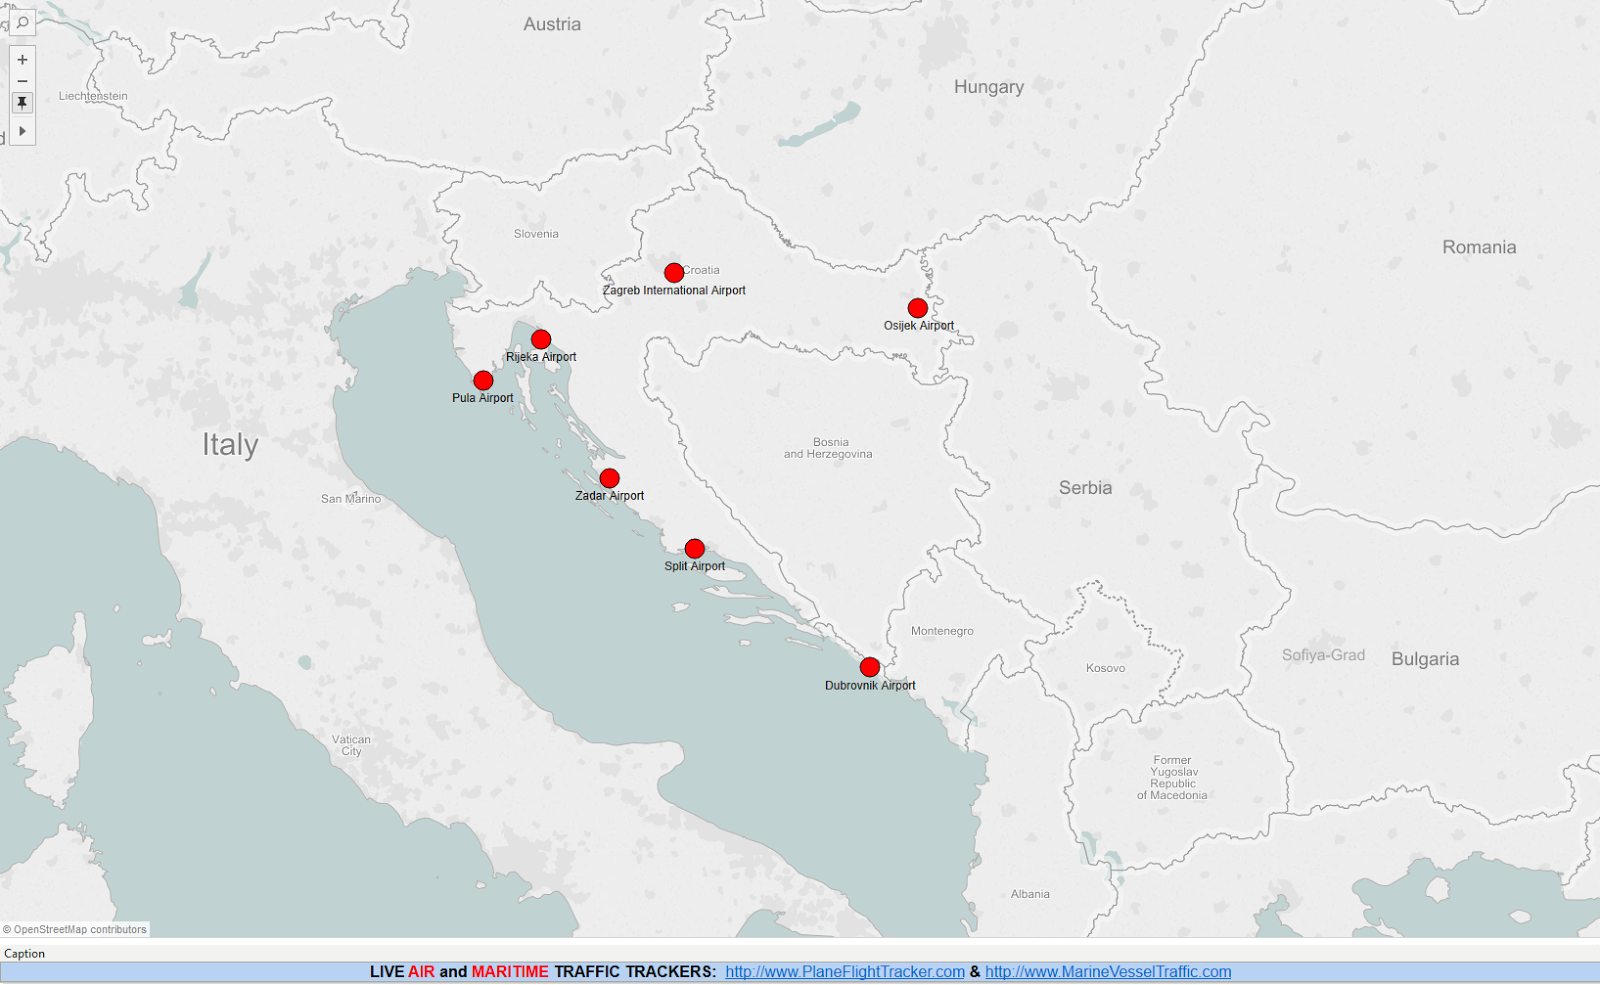 CROATIA AIRPORTS MAP